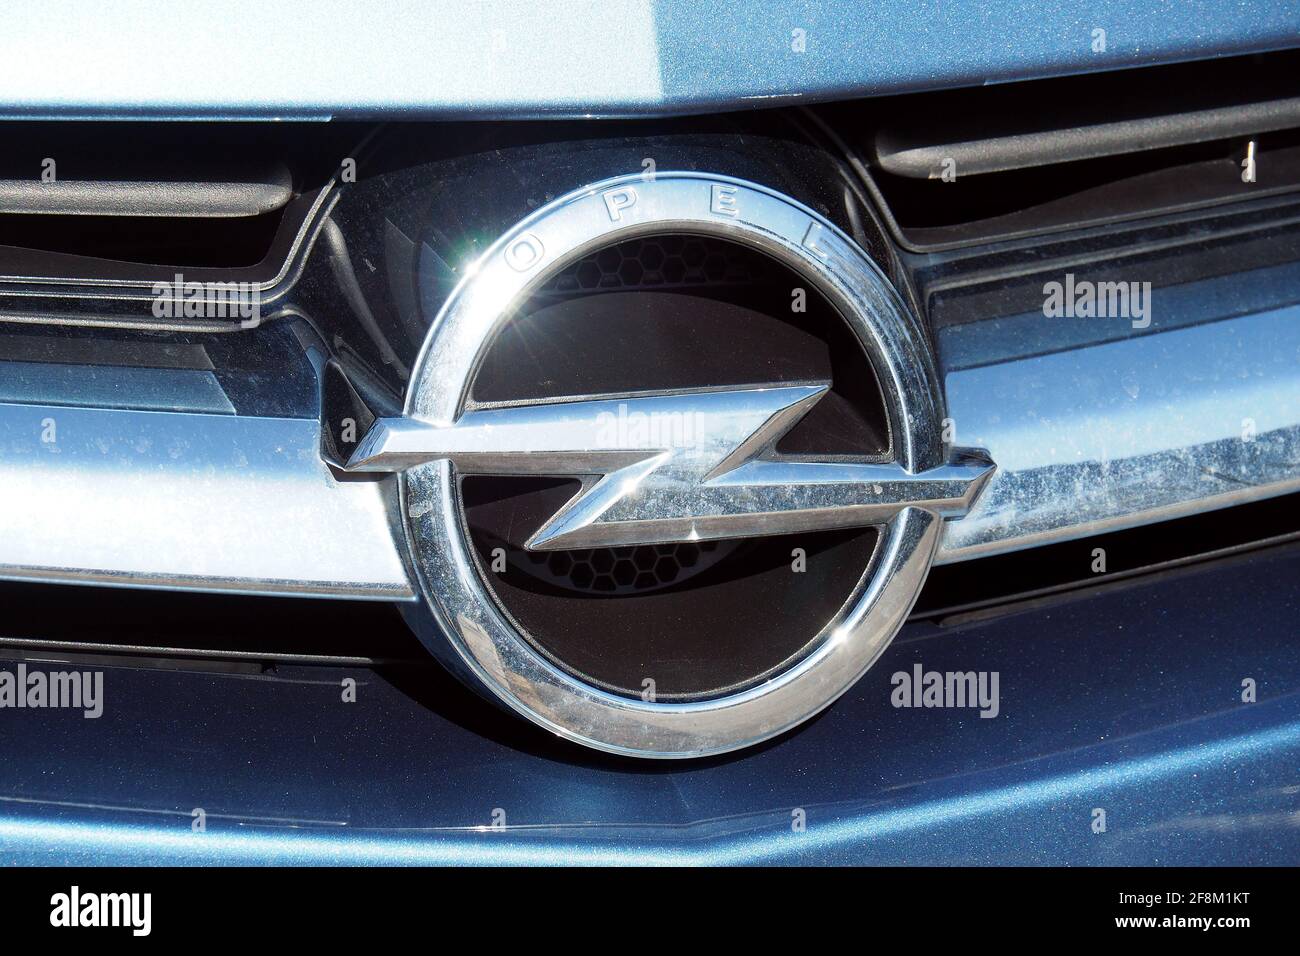 Opel logo on a car Stock Photo - Alamy